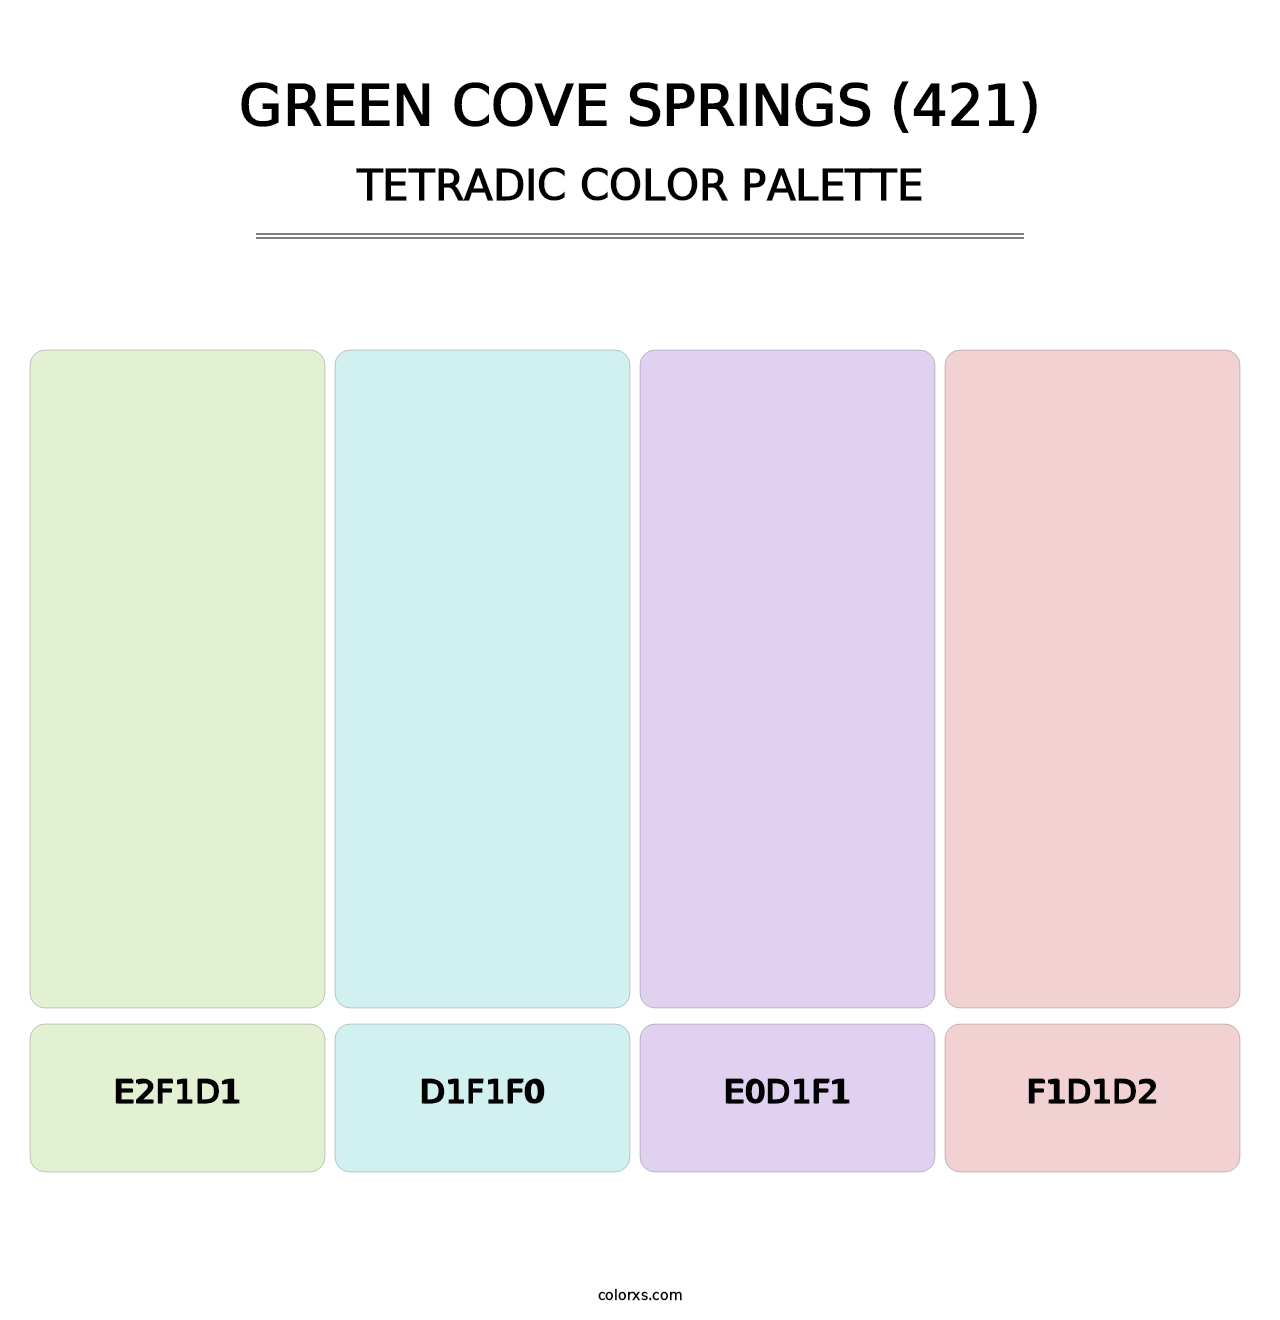 Green Cove Springs (421) - Tetradic Color Palette